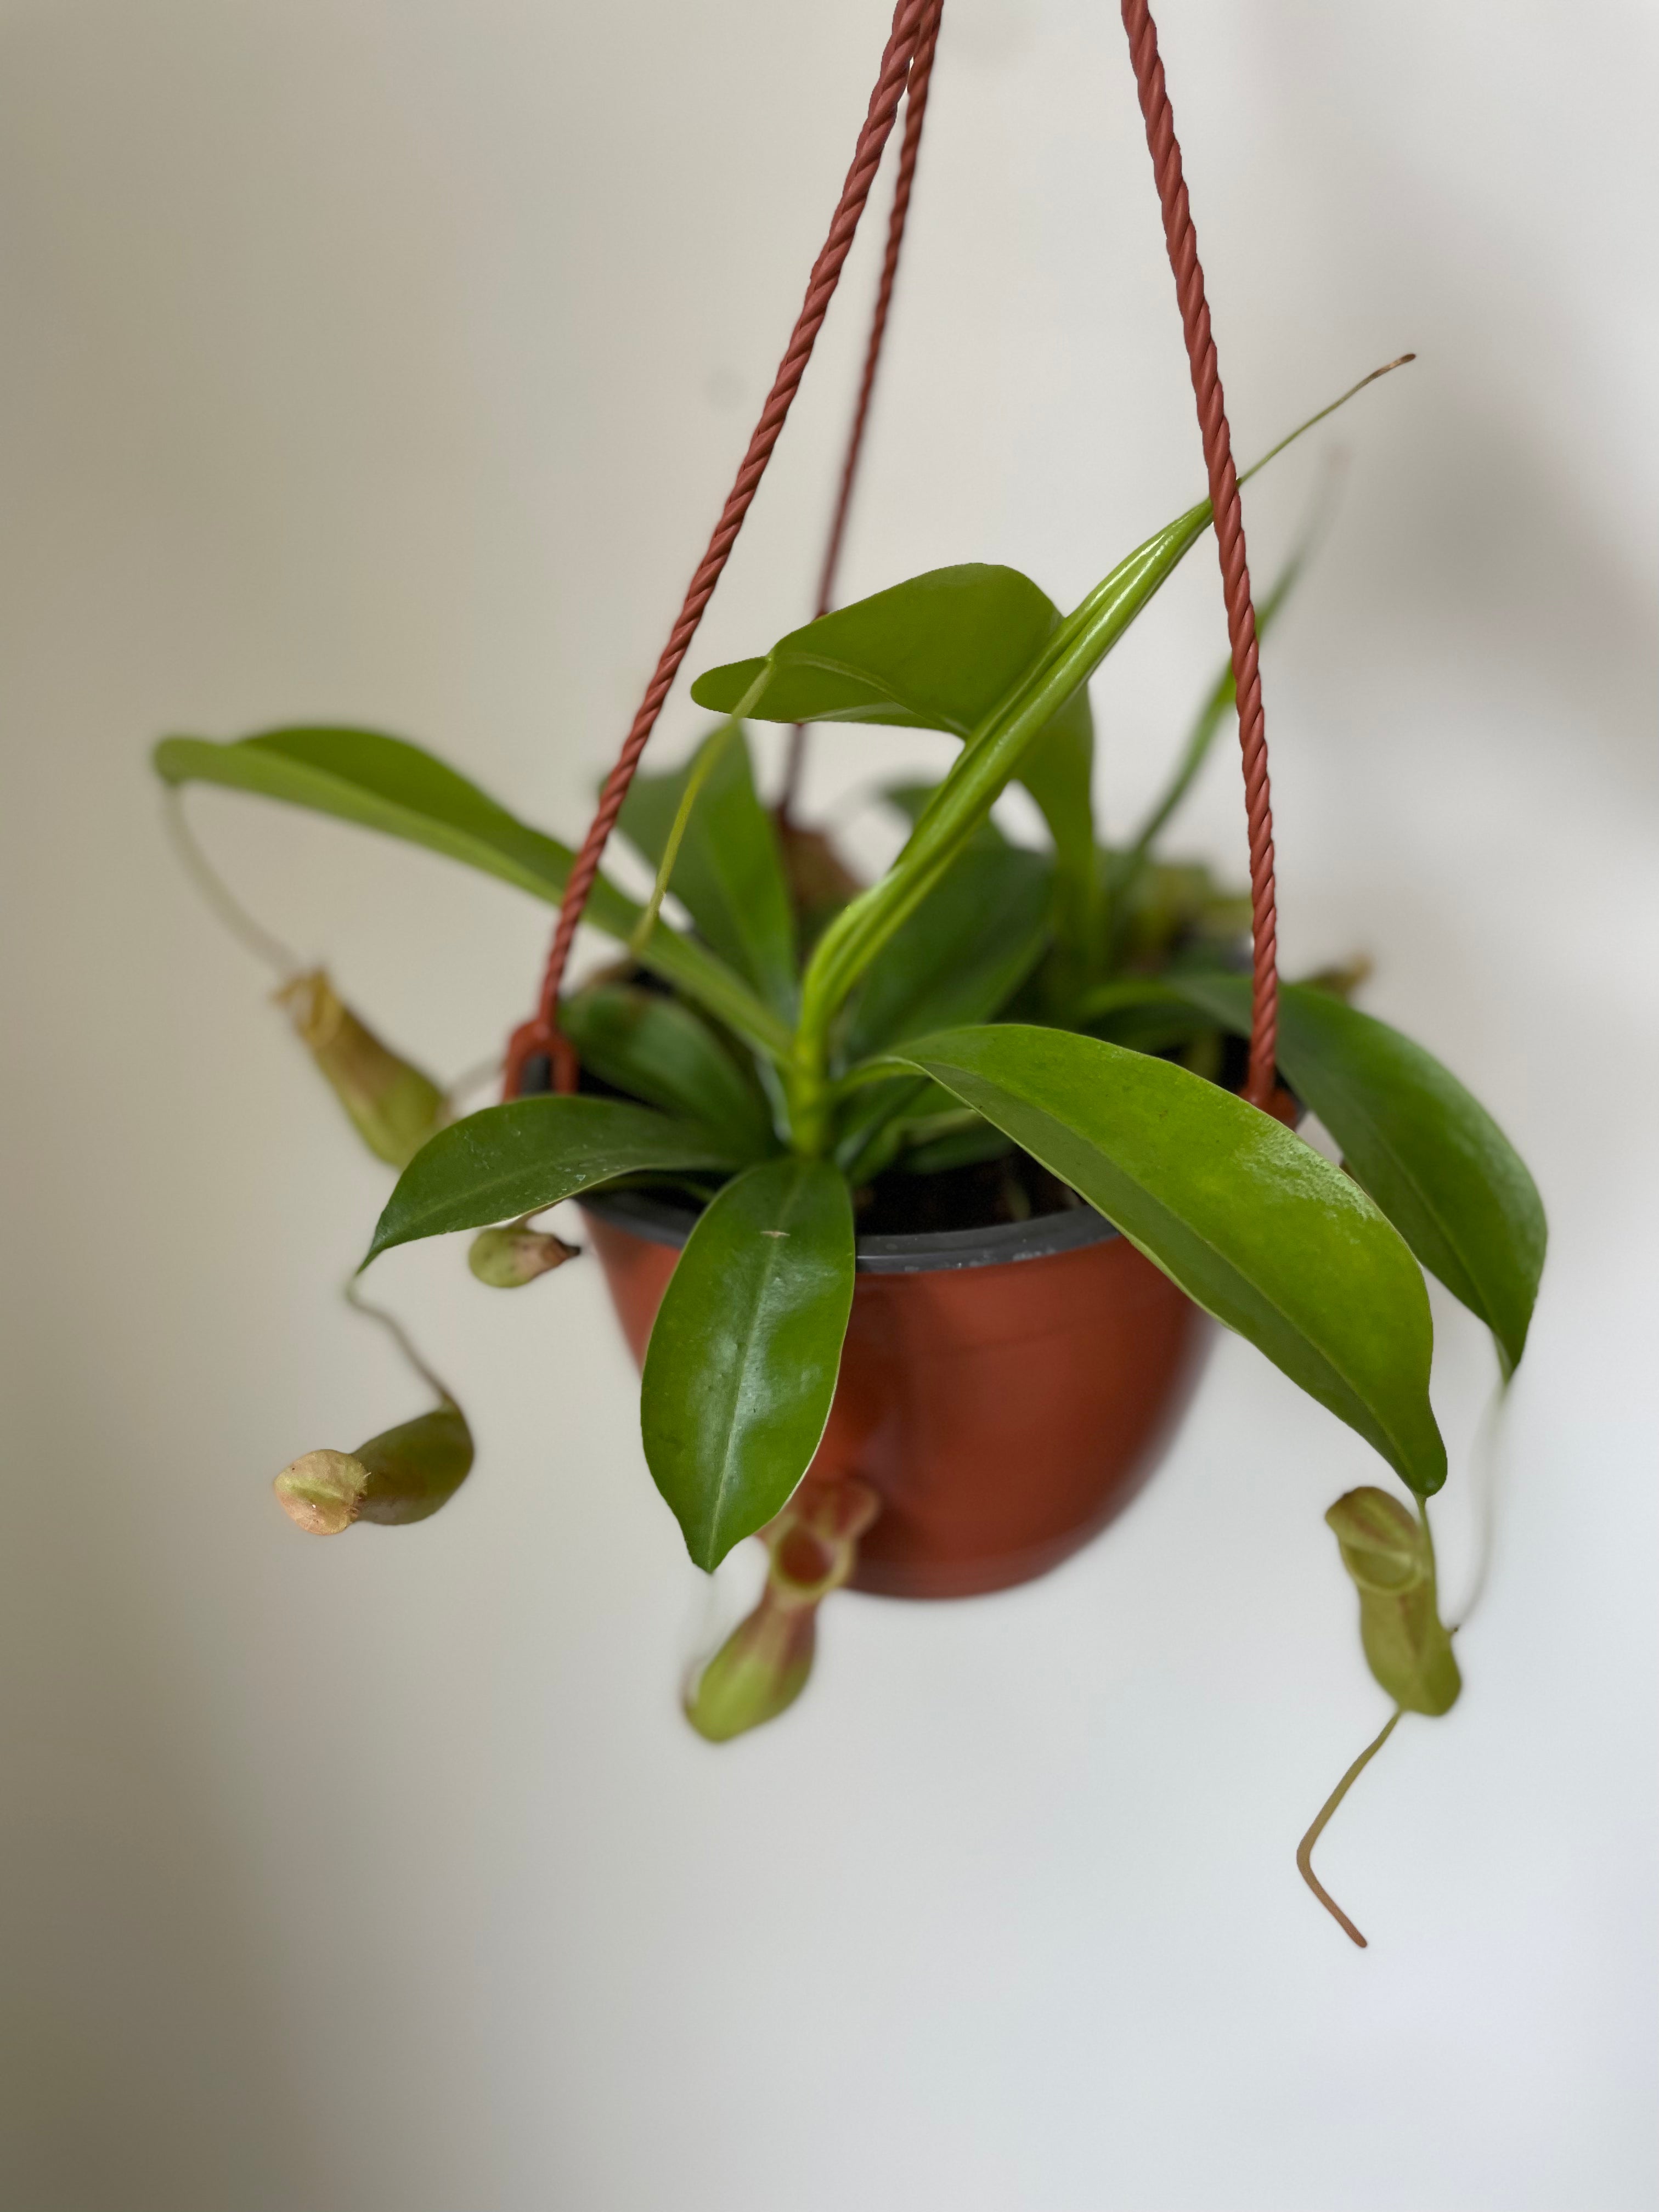 Carnivorous 'Monkey Cup' Plant